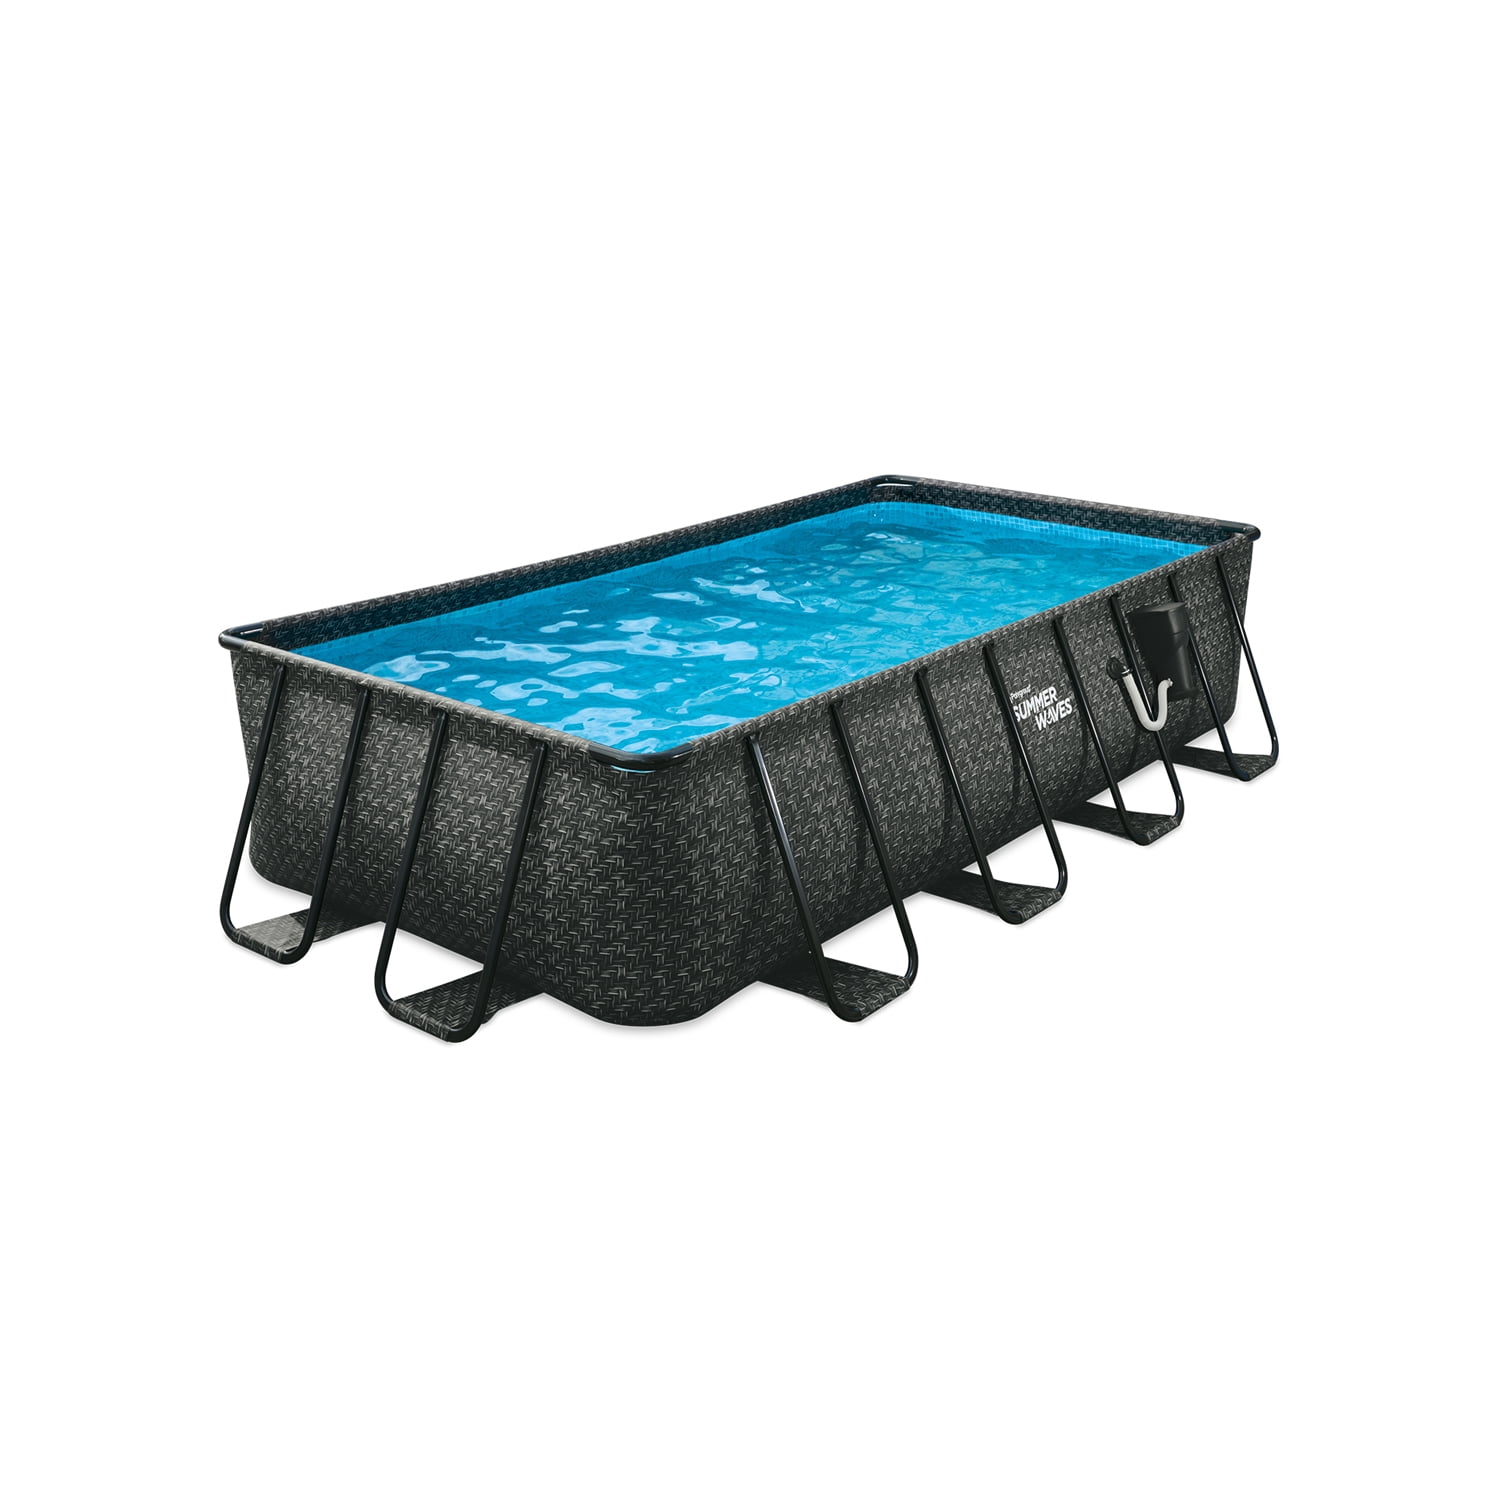 Print Elite Frame Rectangular Pool Kit, Rectangle Above Ground Pool 8 X 12